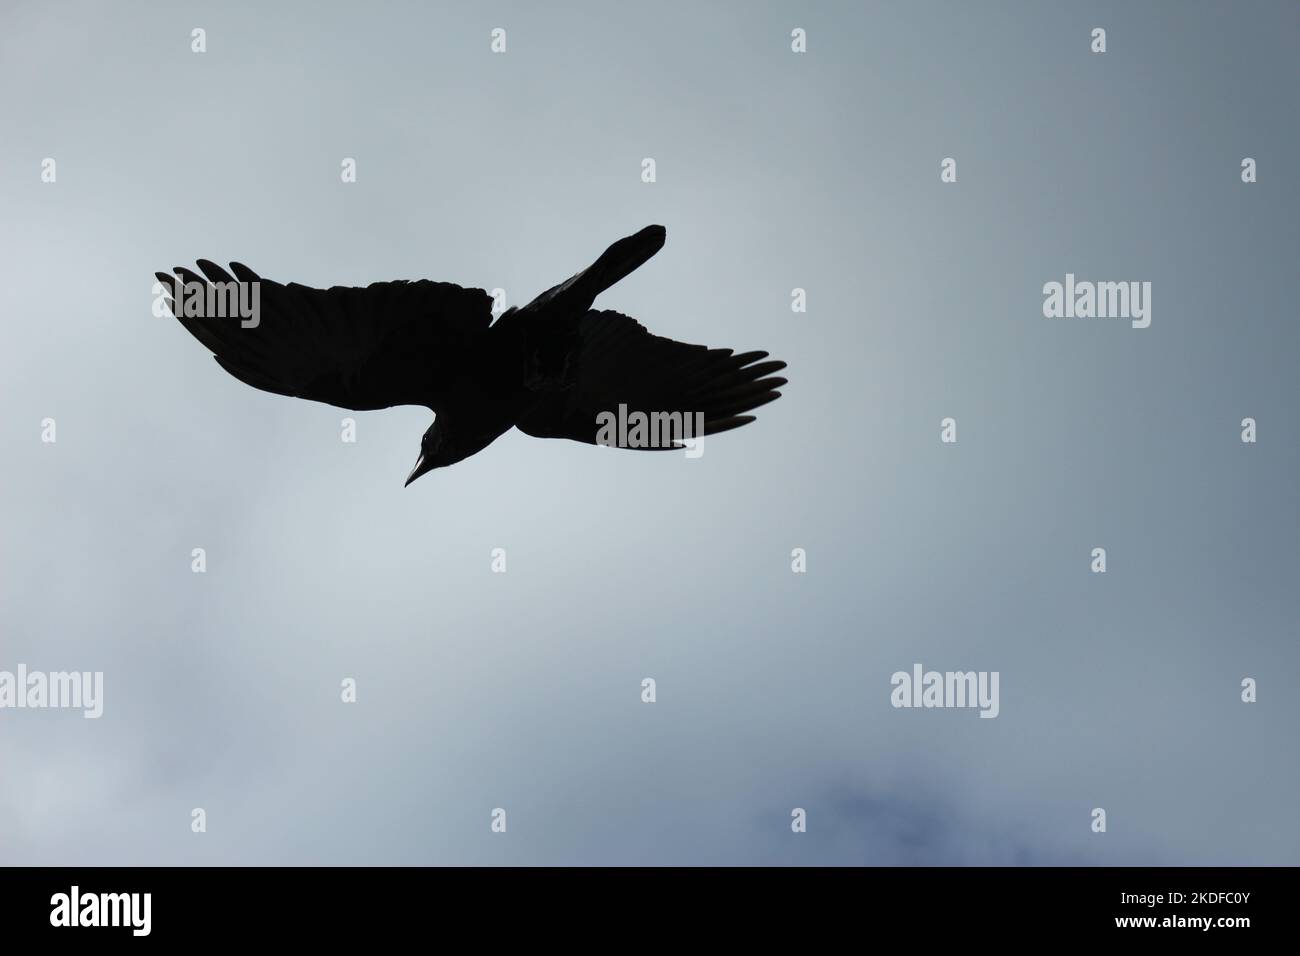 Minimalist black crow silhouette background. Bird flying against cloudy grey sky Stock Photo